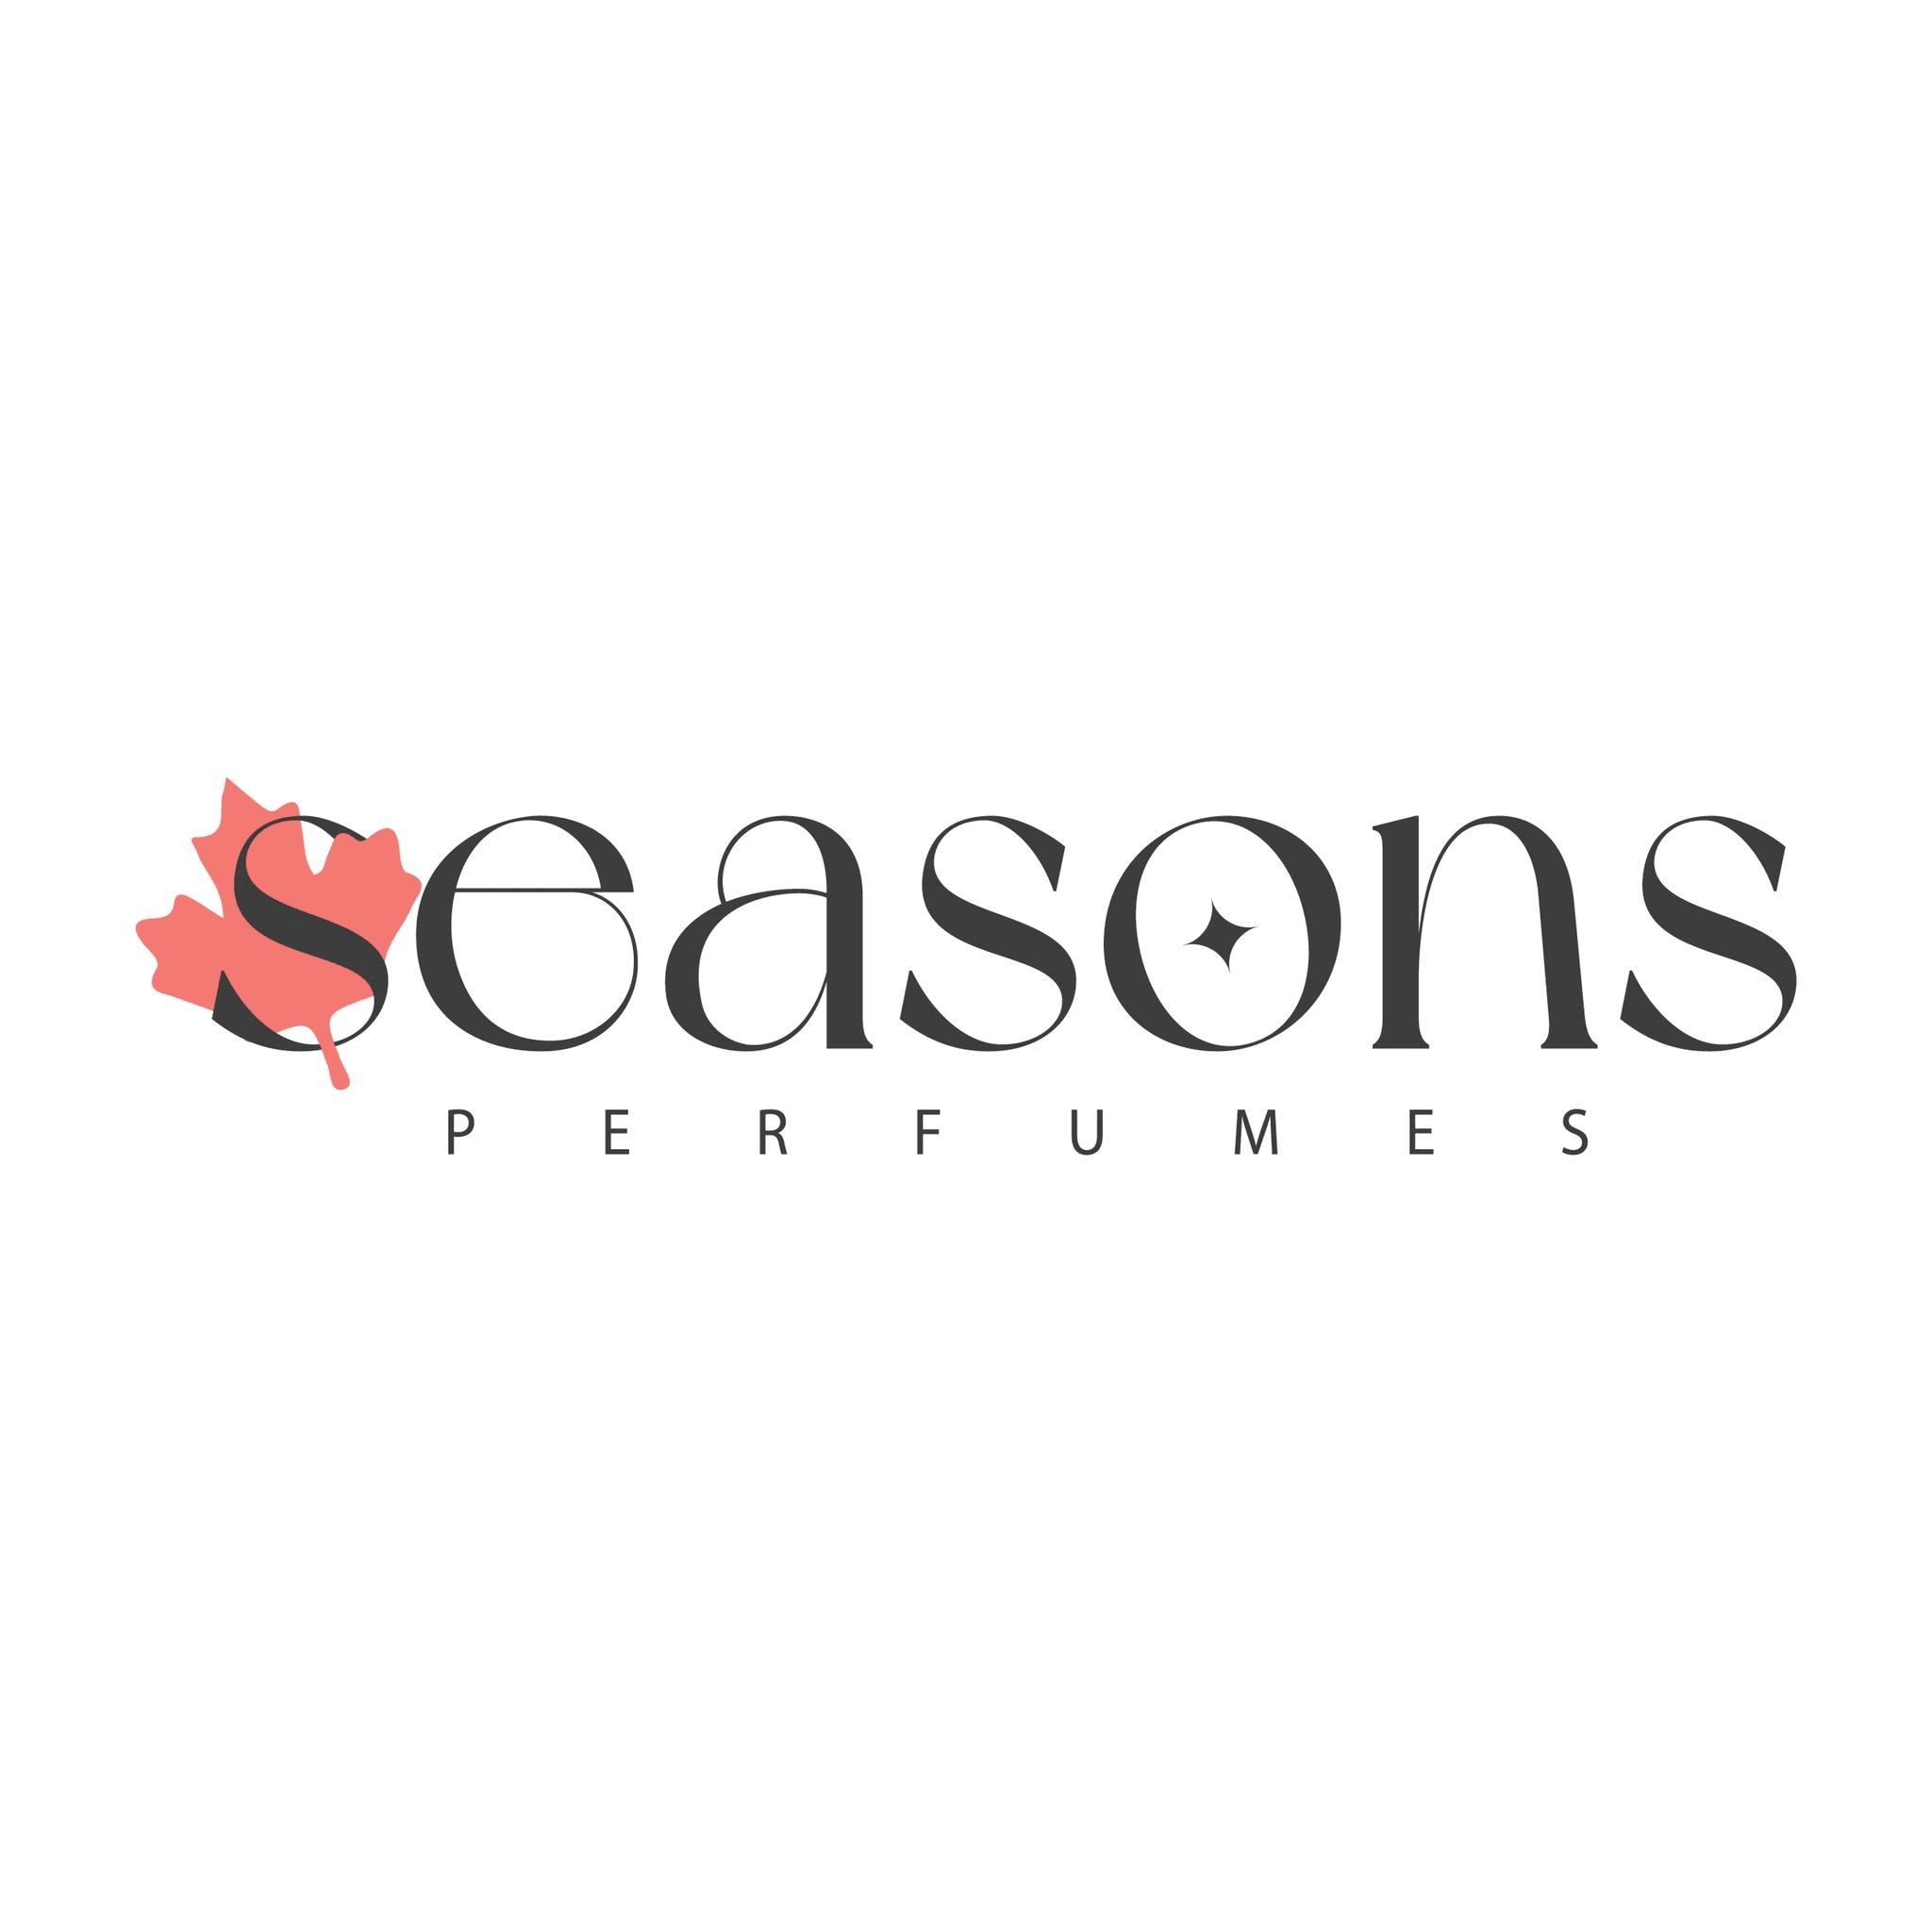 Seasons Perfumes